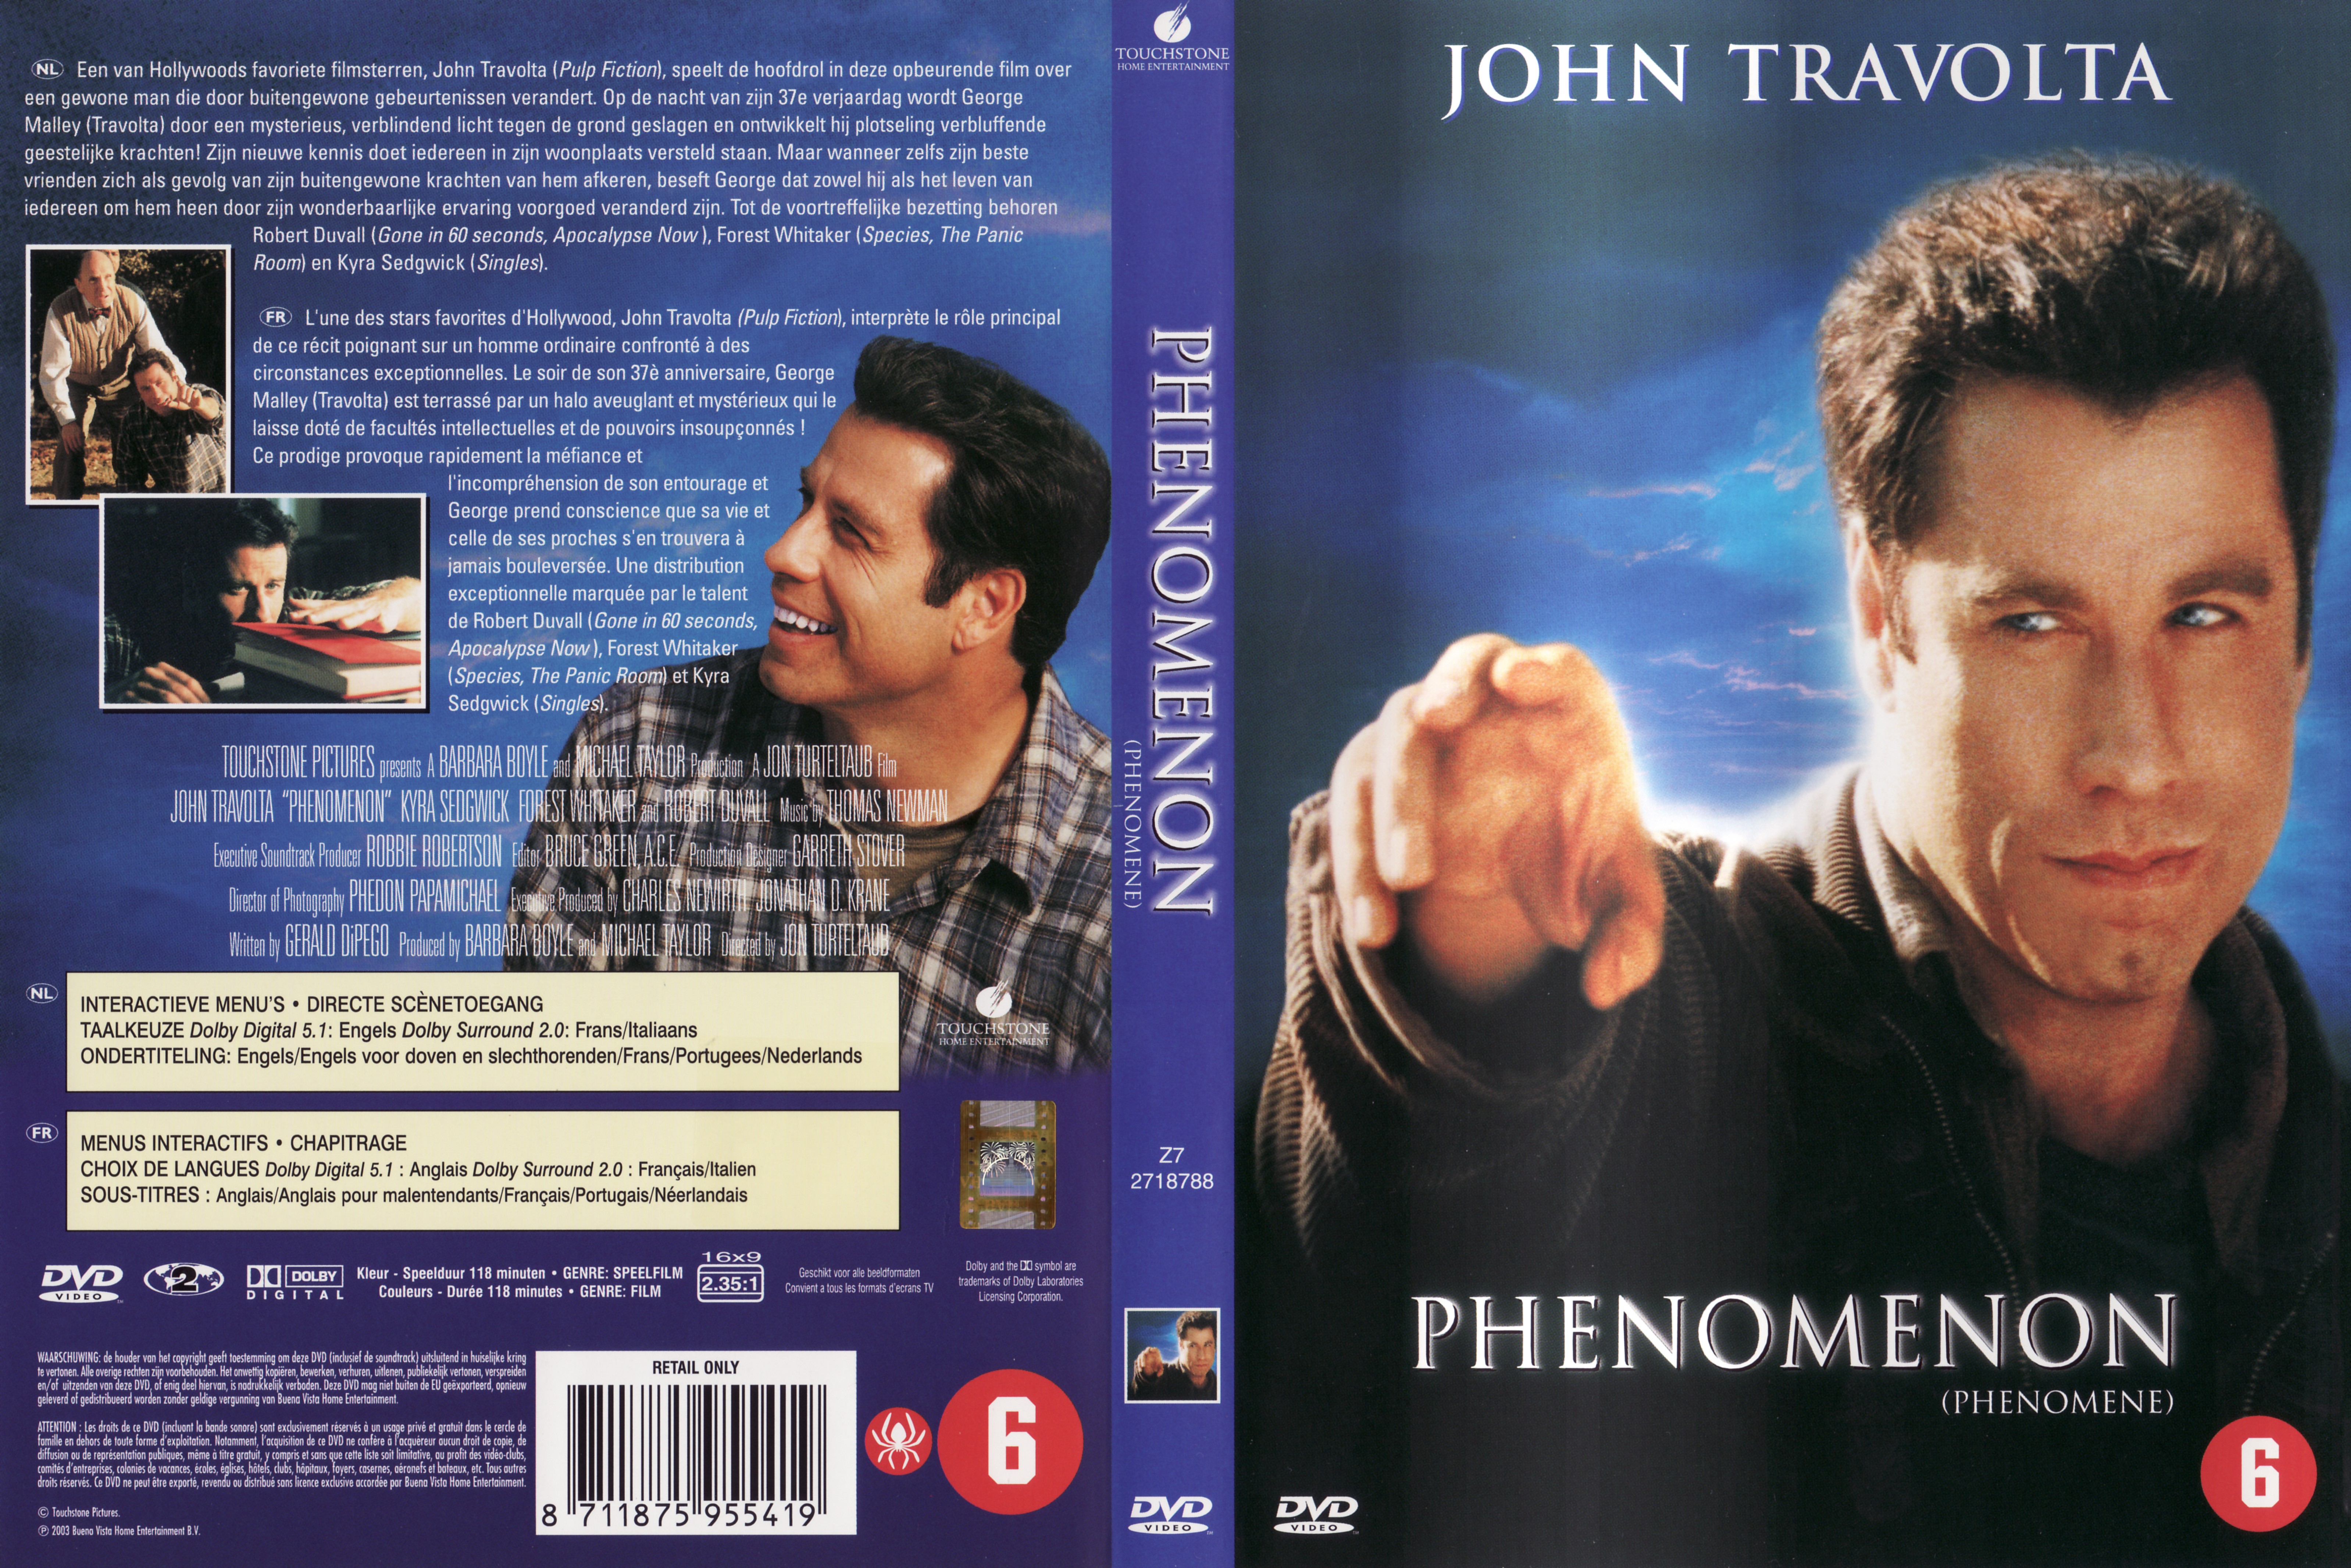 Jaquette DVD Phenomene